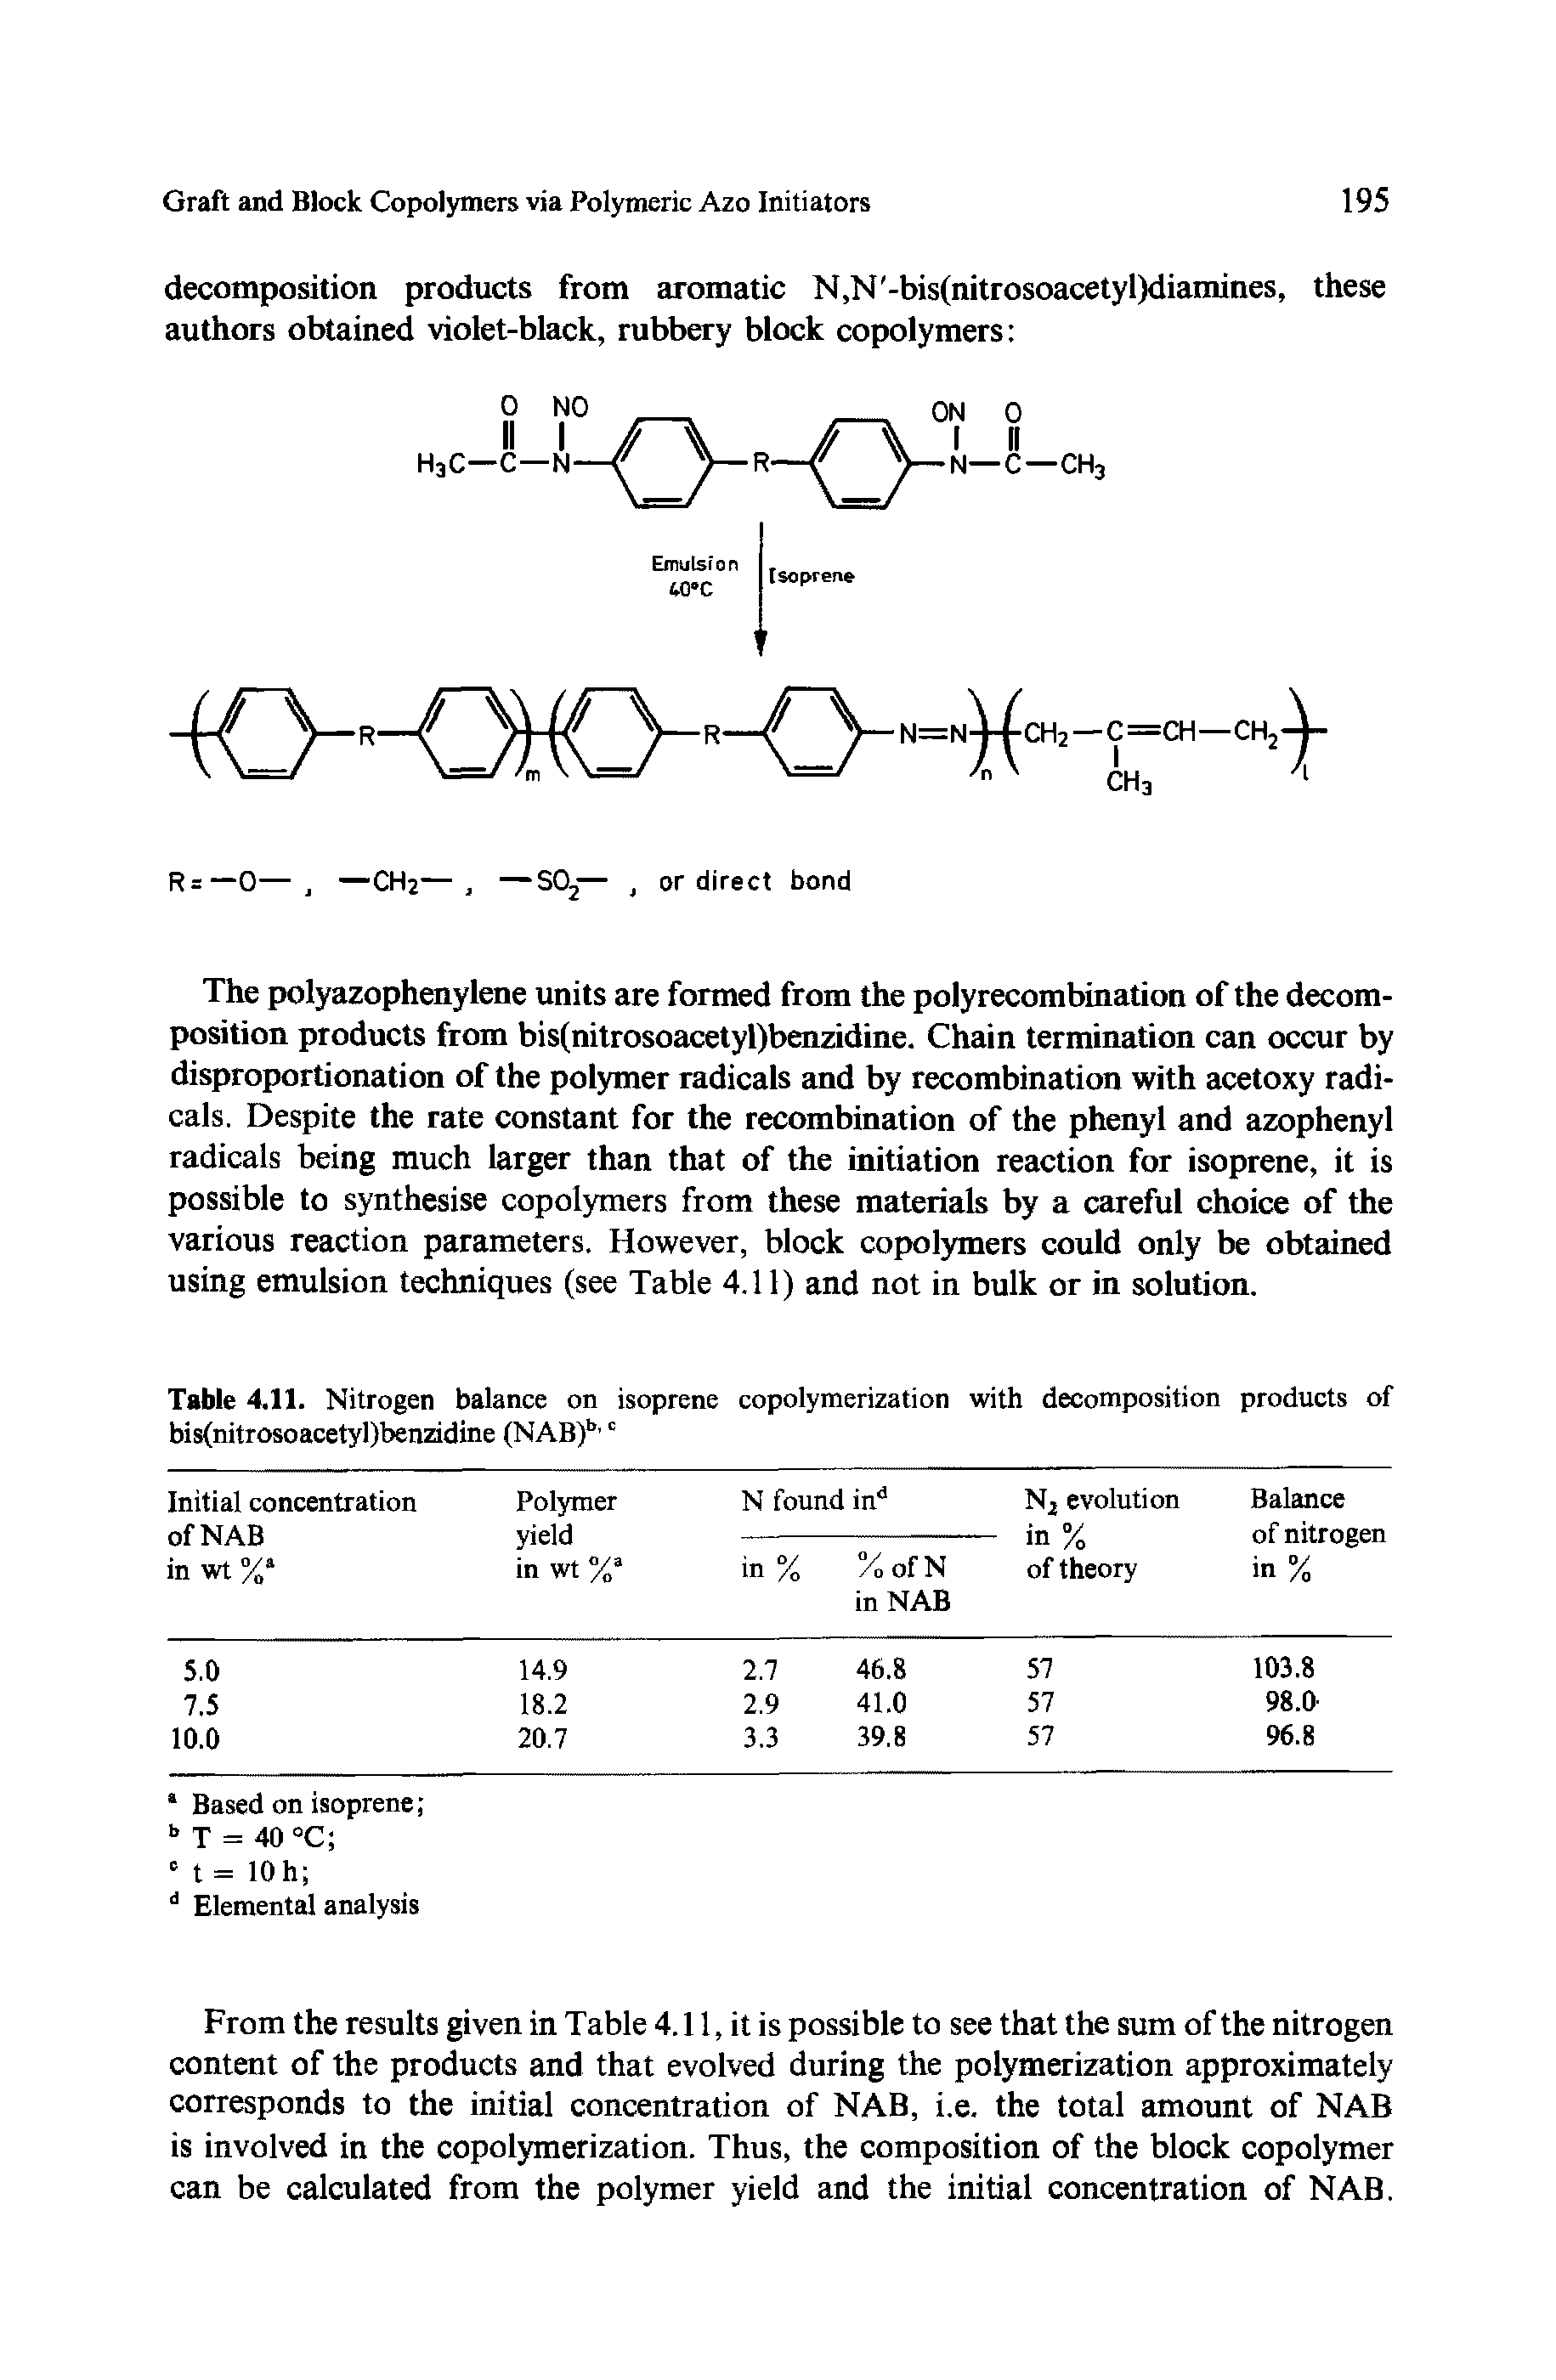 Table 4.11. Nitrogen balance on isoprene copolymerization with decomposition products of bis(nitrosoacetyl)benzidine (NAB)b 0...